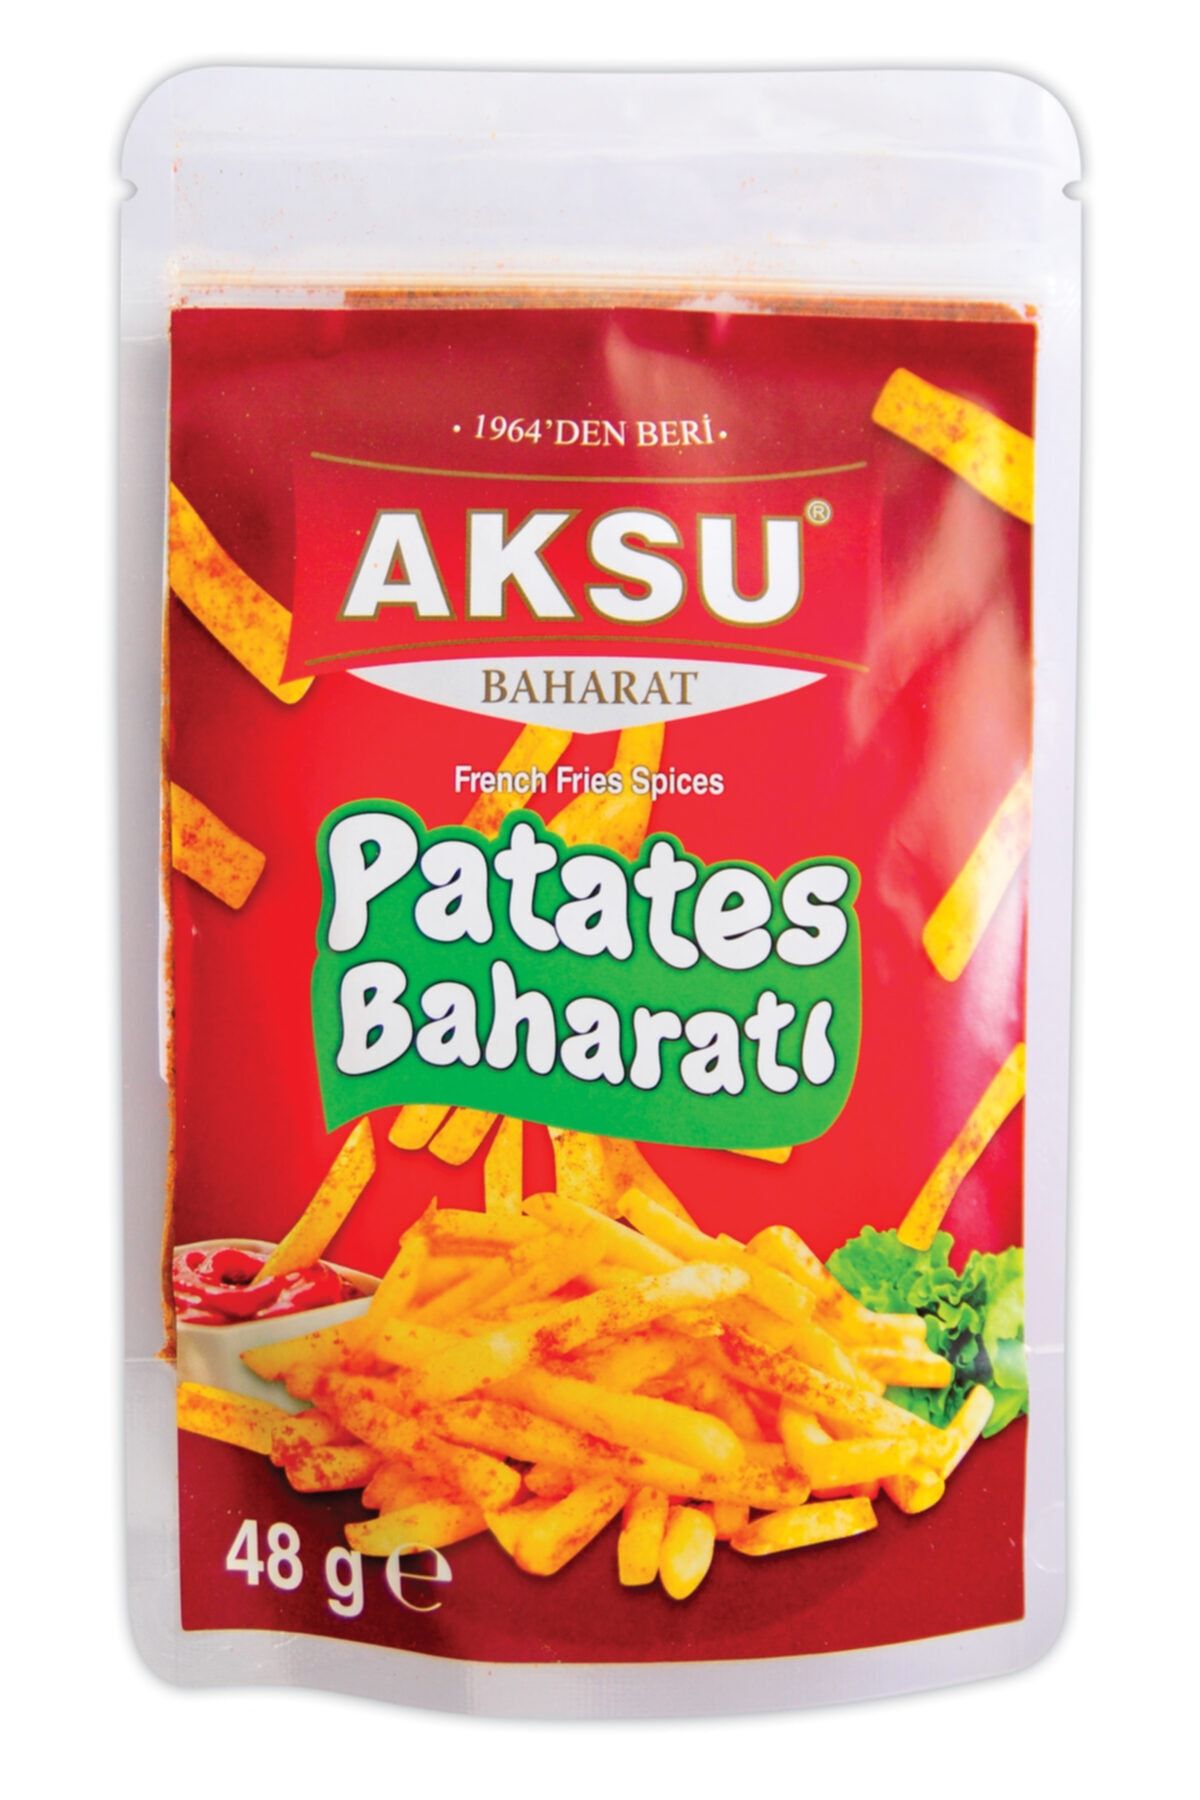 AKSU Patates Baharatı 48g